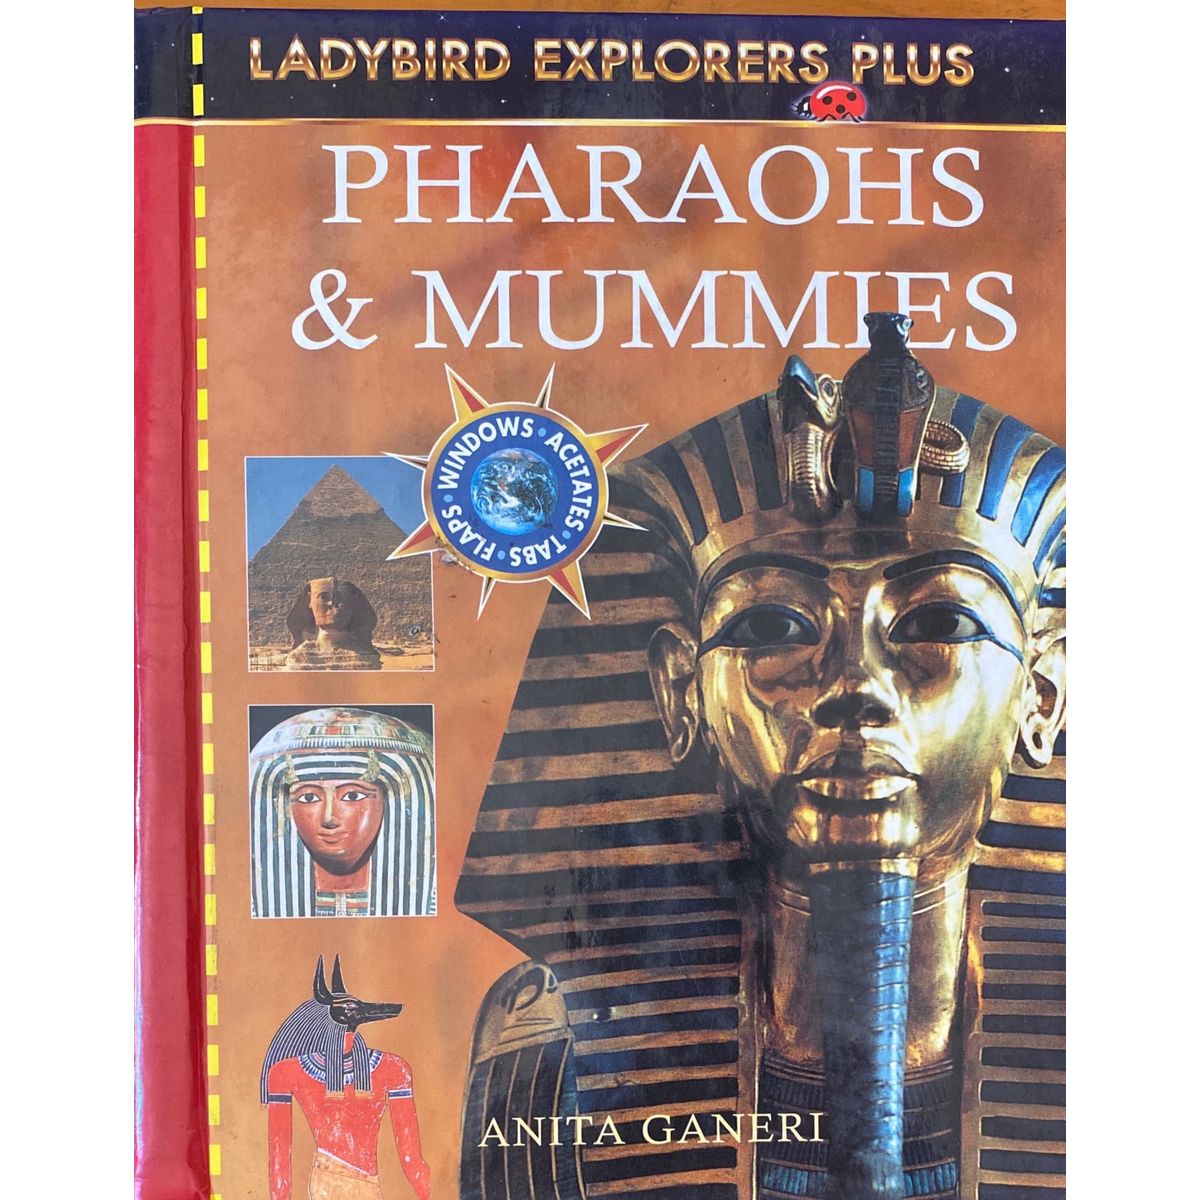 ISBN: 9780721456287 / 0721456286 - Pharaohs & Mummies by Anita Ganeri [1996]